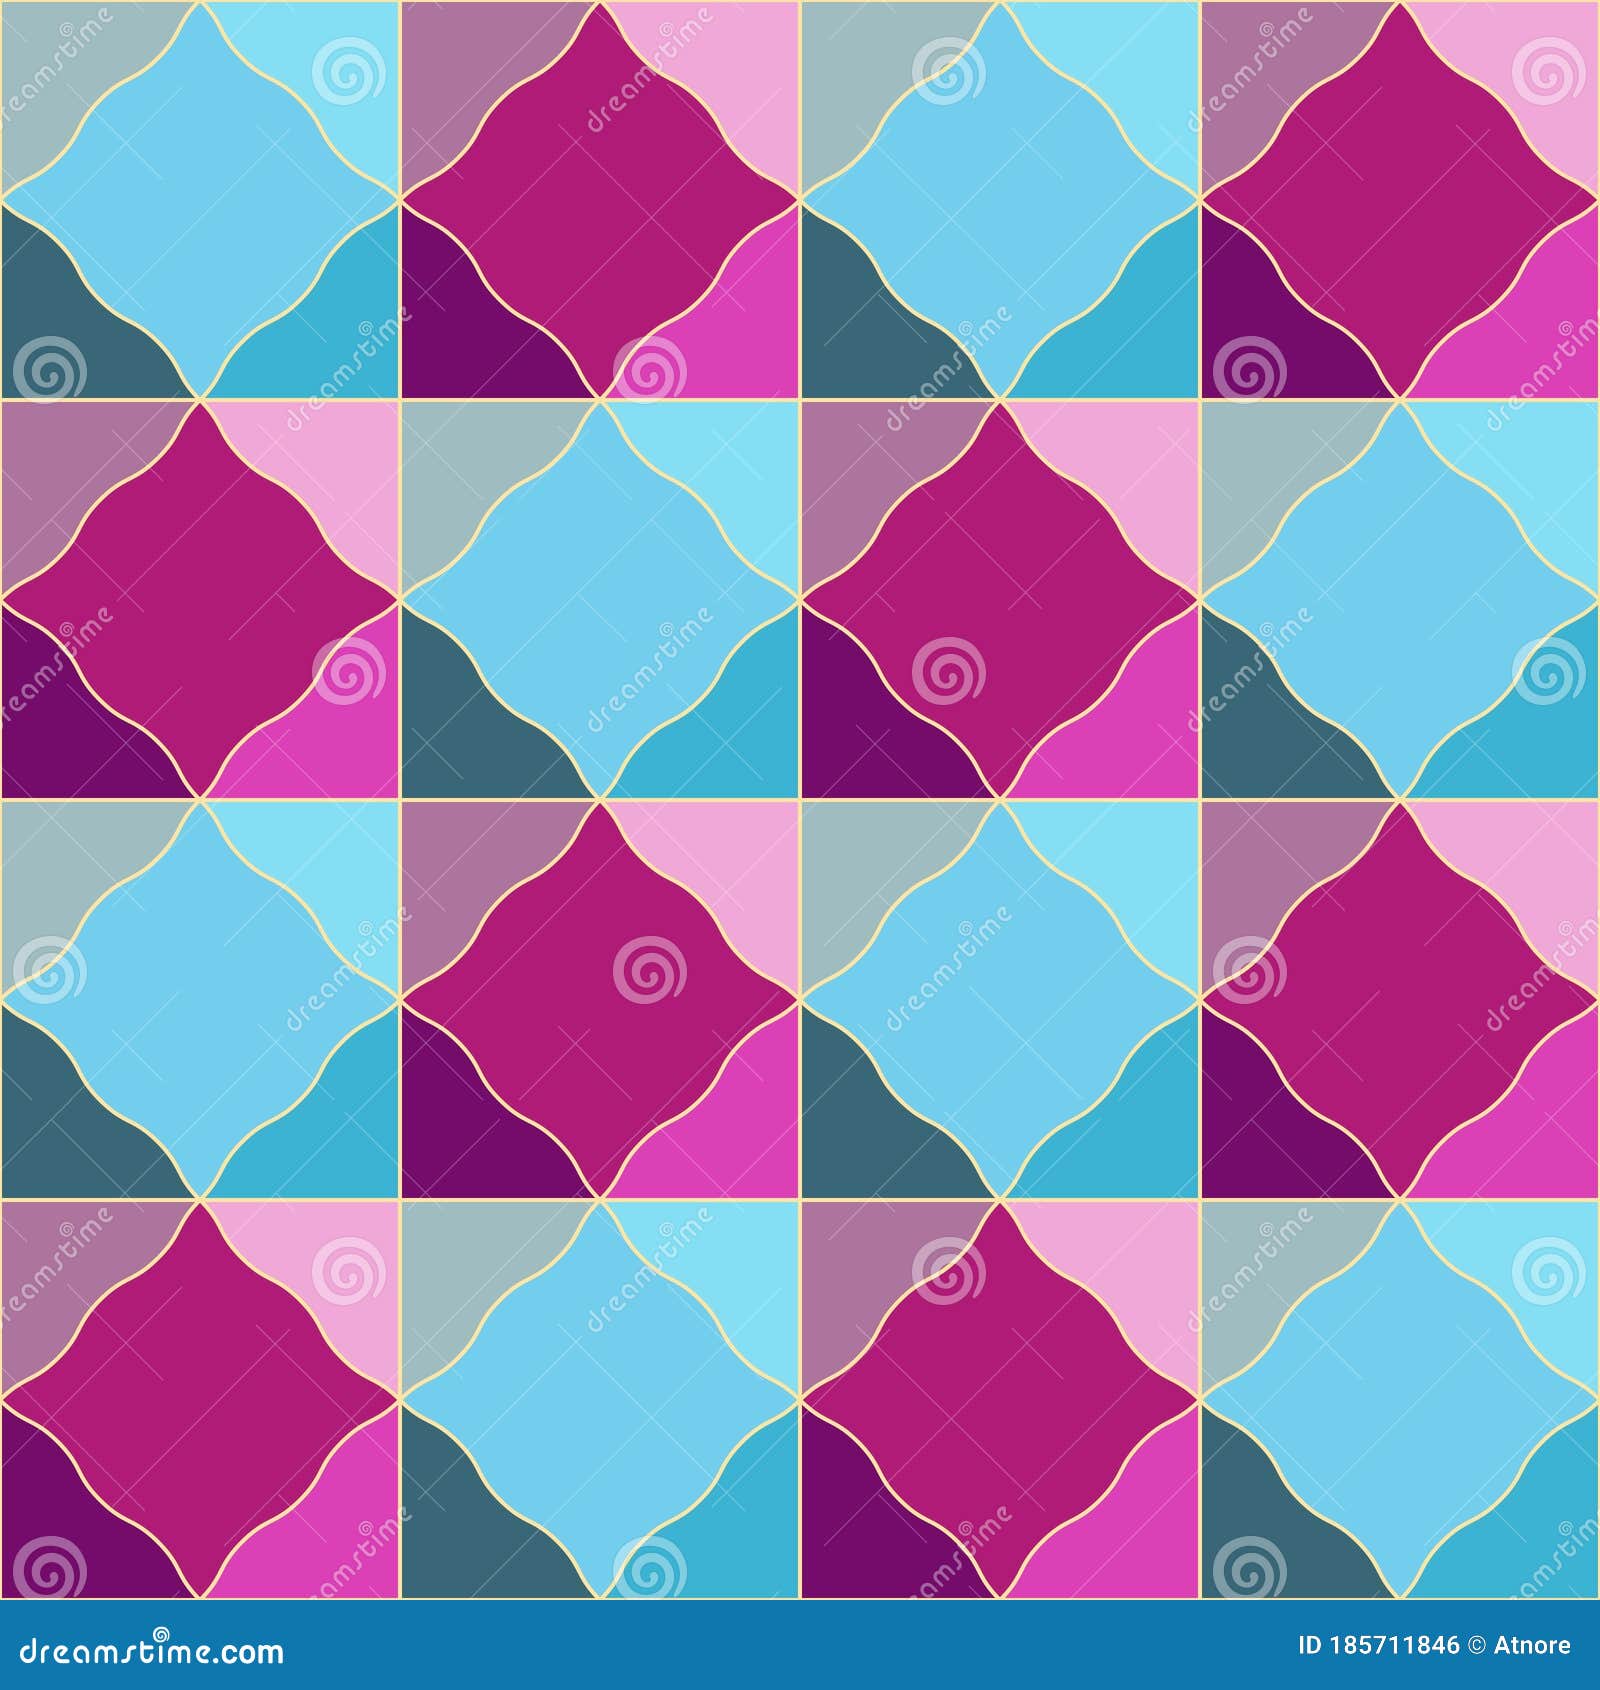 seamless geometric pattern of purple and blue tiles